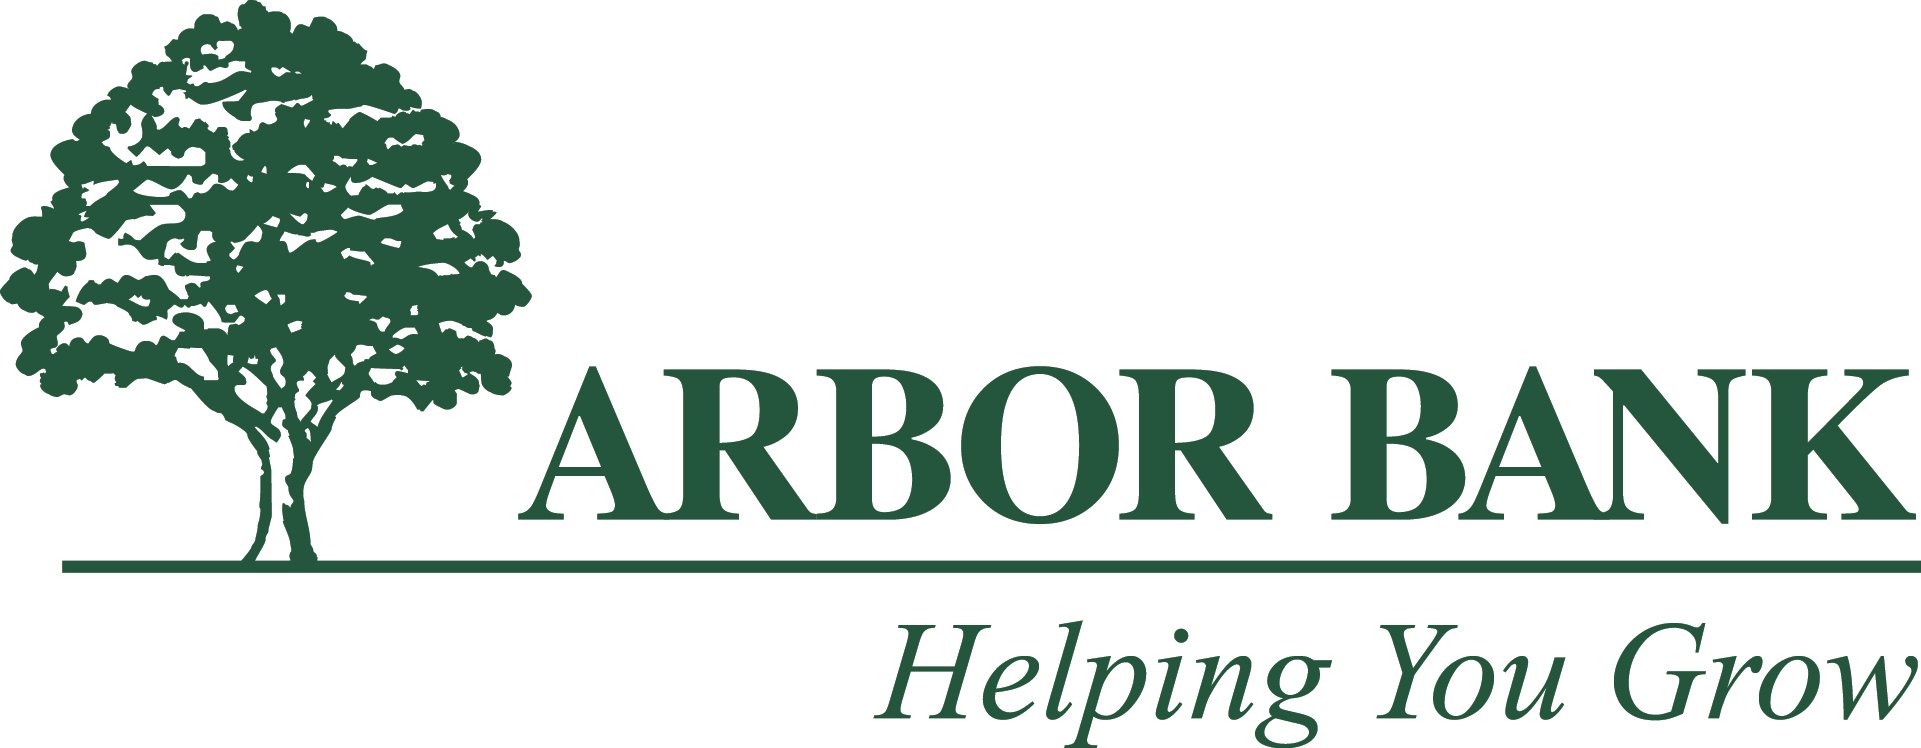 ArborBank_Logo_TreeNameTag_Green.jpg